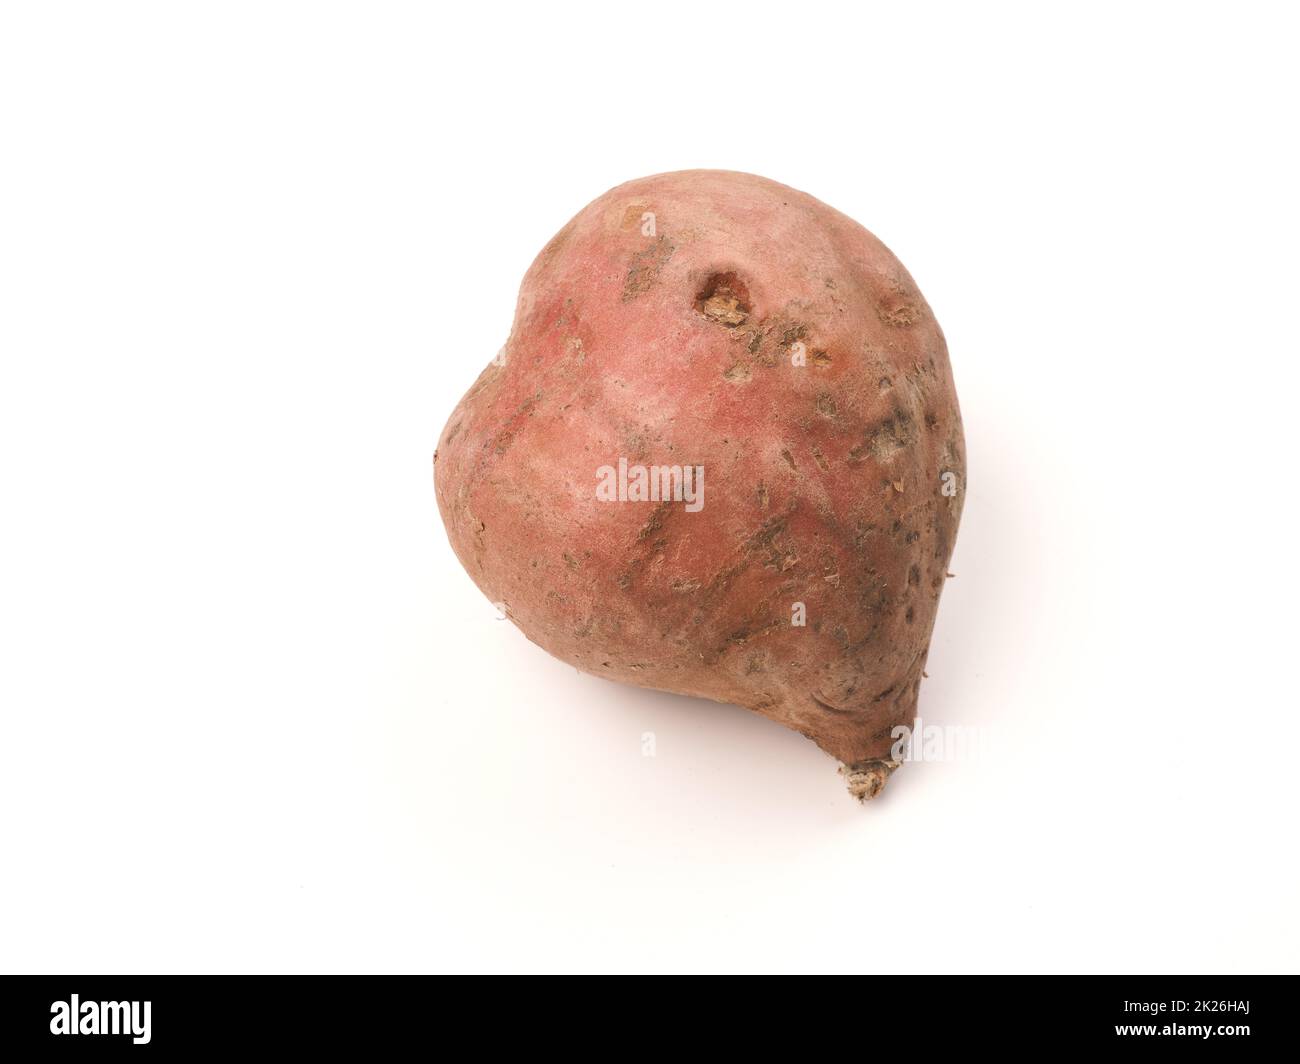 A heart shaped sweet potato on a white studio background Stock Photo